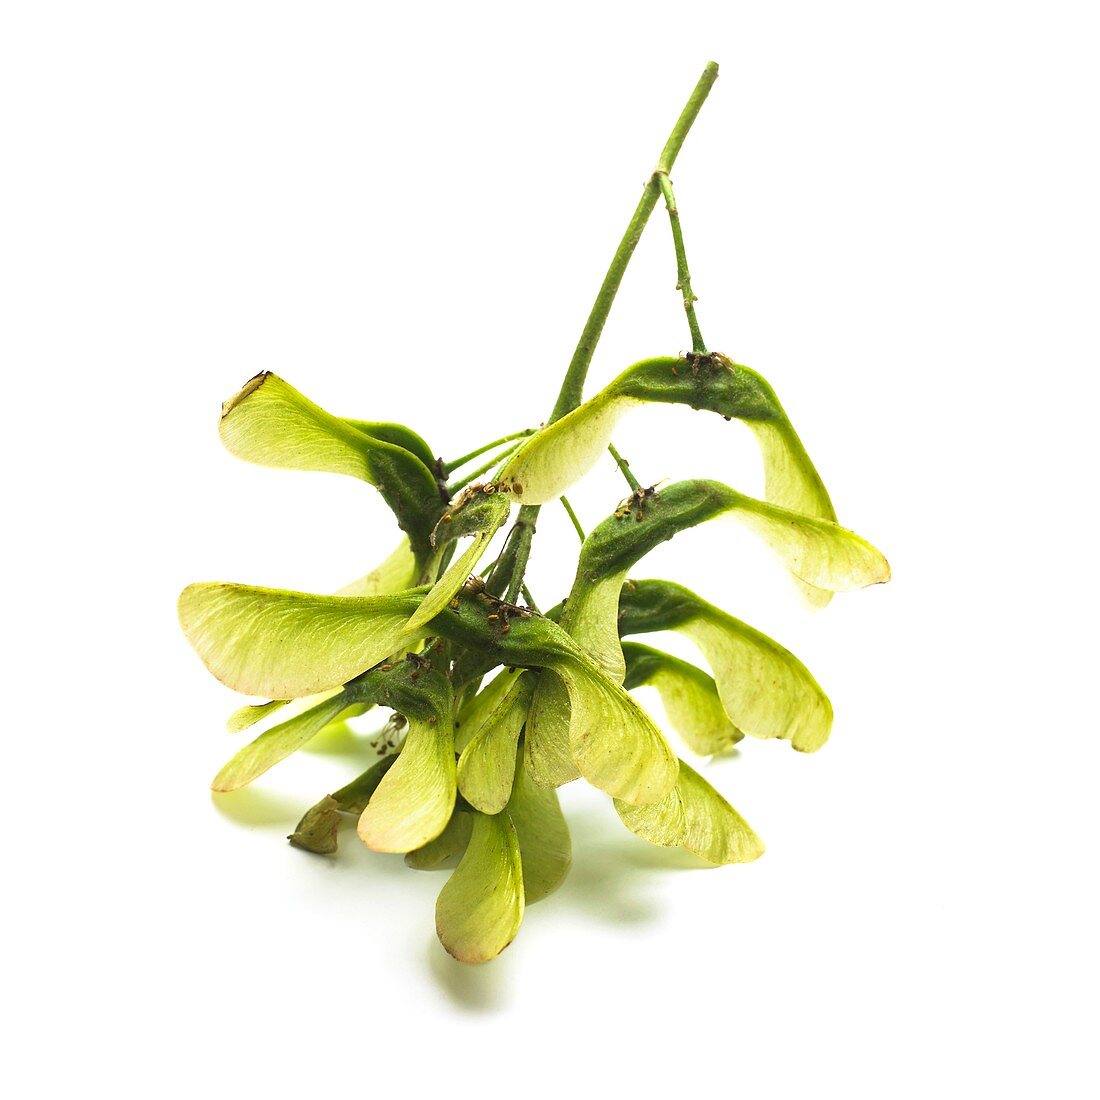 Sycamore Acer pseudoplatanus seeds